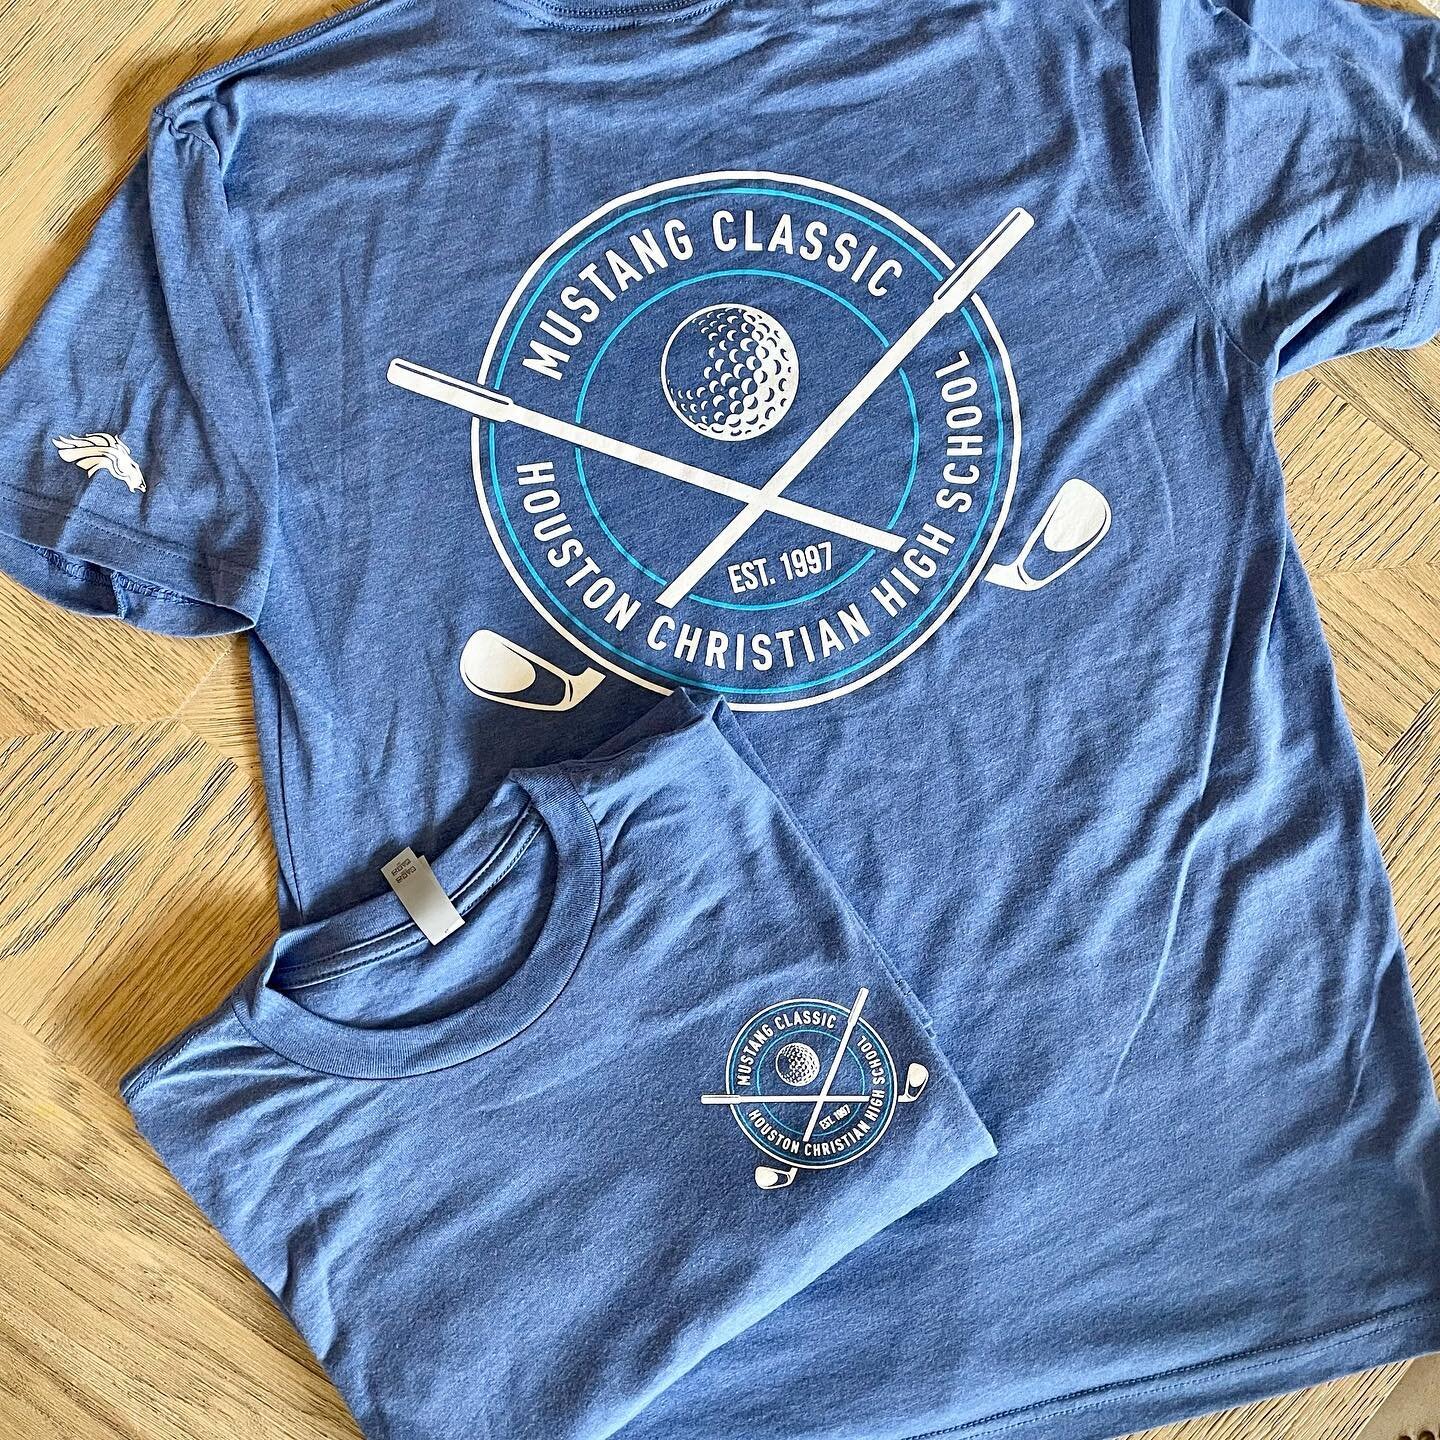 HCHS golf tourney t-shirts ⛳️ designed by @thehorton6 and @hortonsix 😁